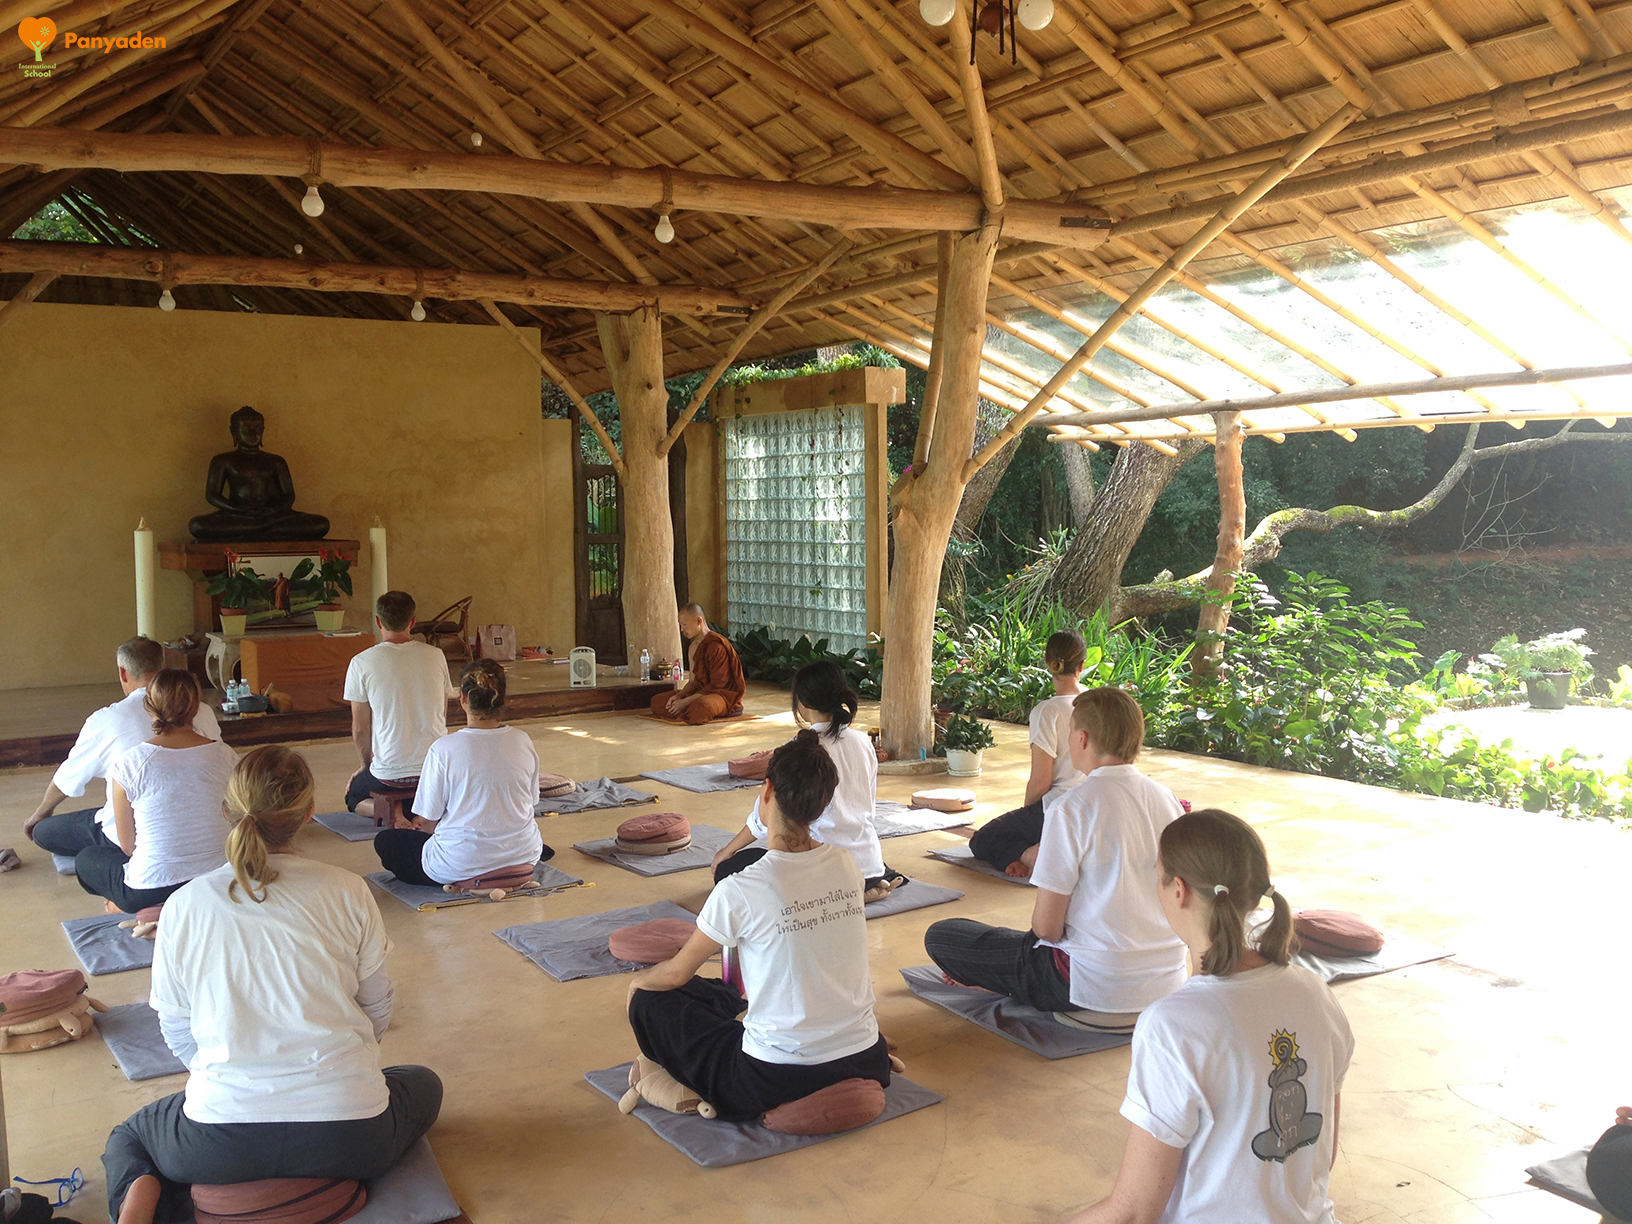 Panyaden teacher meditation retreat Chiang Rai - sitting meditation